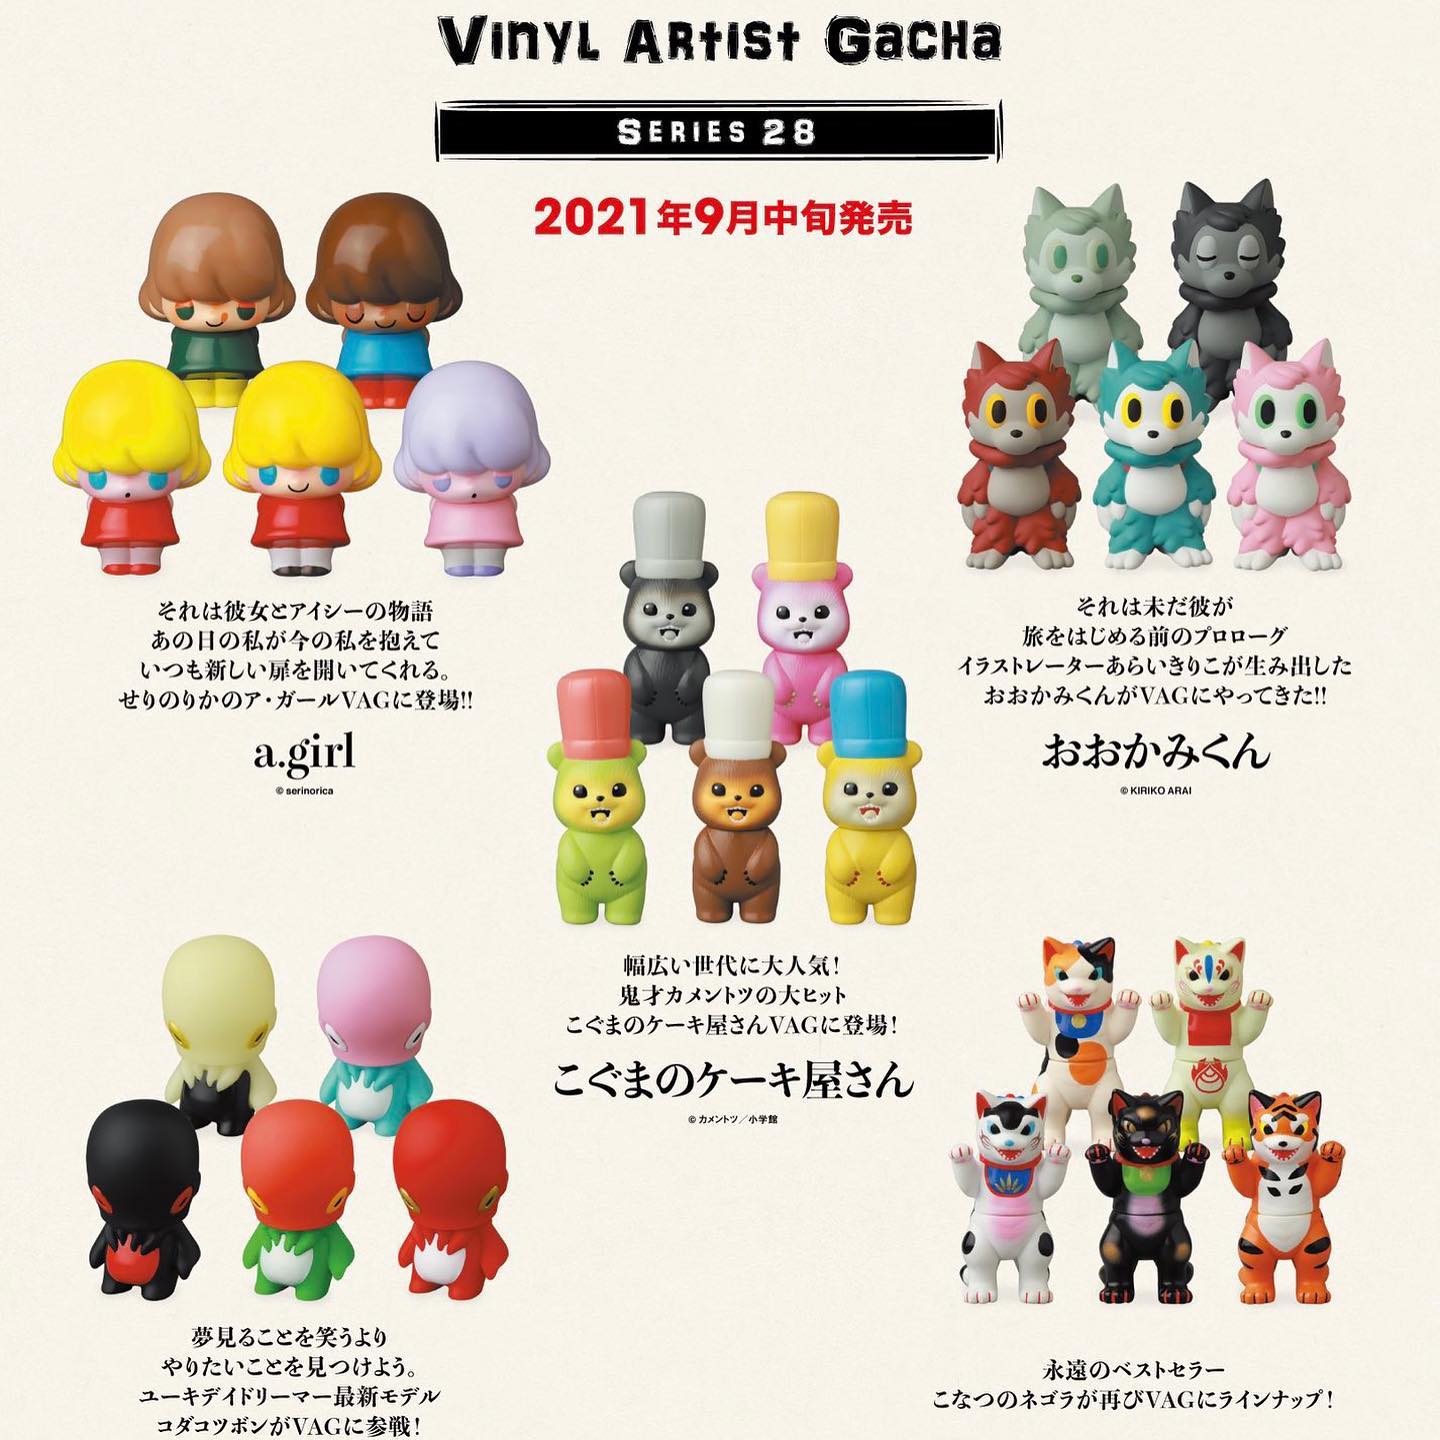 VAG VINYL ARTIST GACHA Series 28 By Medicom Toy - The Toy Chronicle